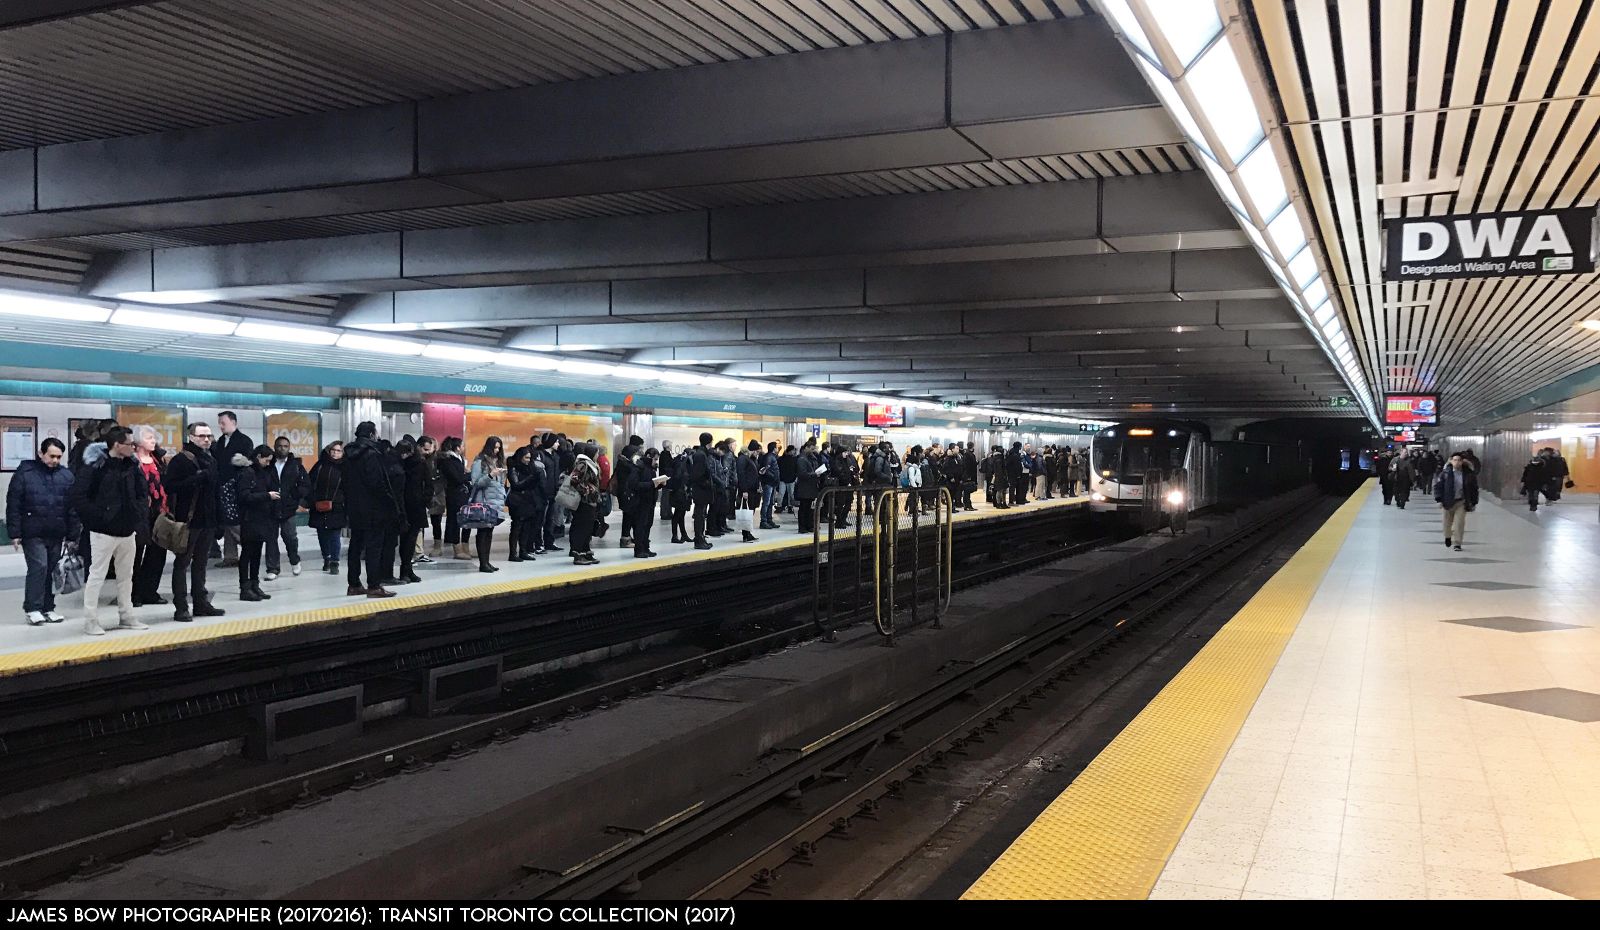 Brutal crimen en la línea del metro de Toronto